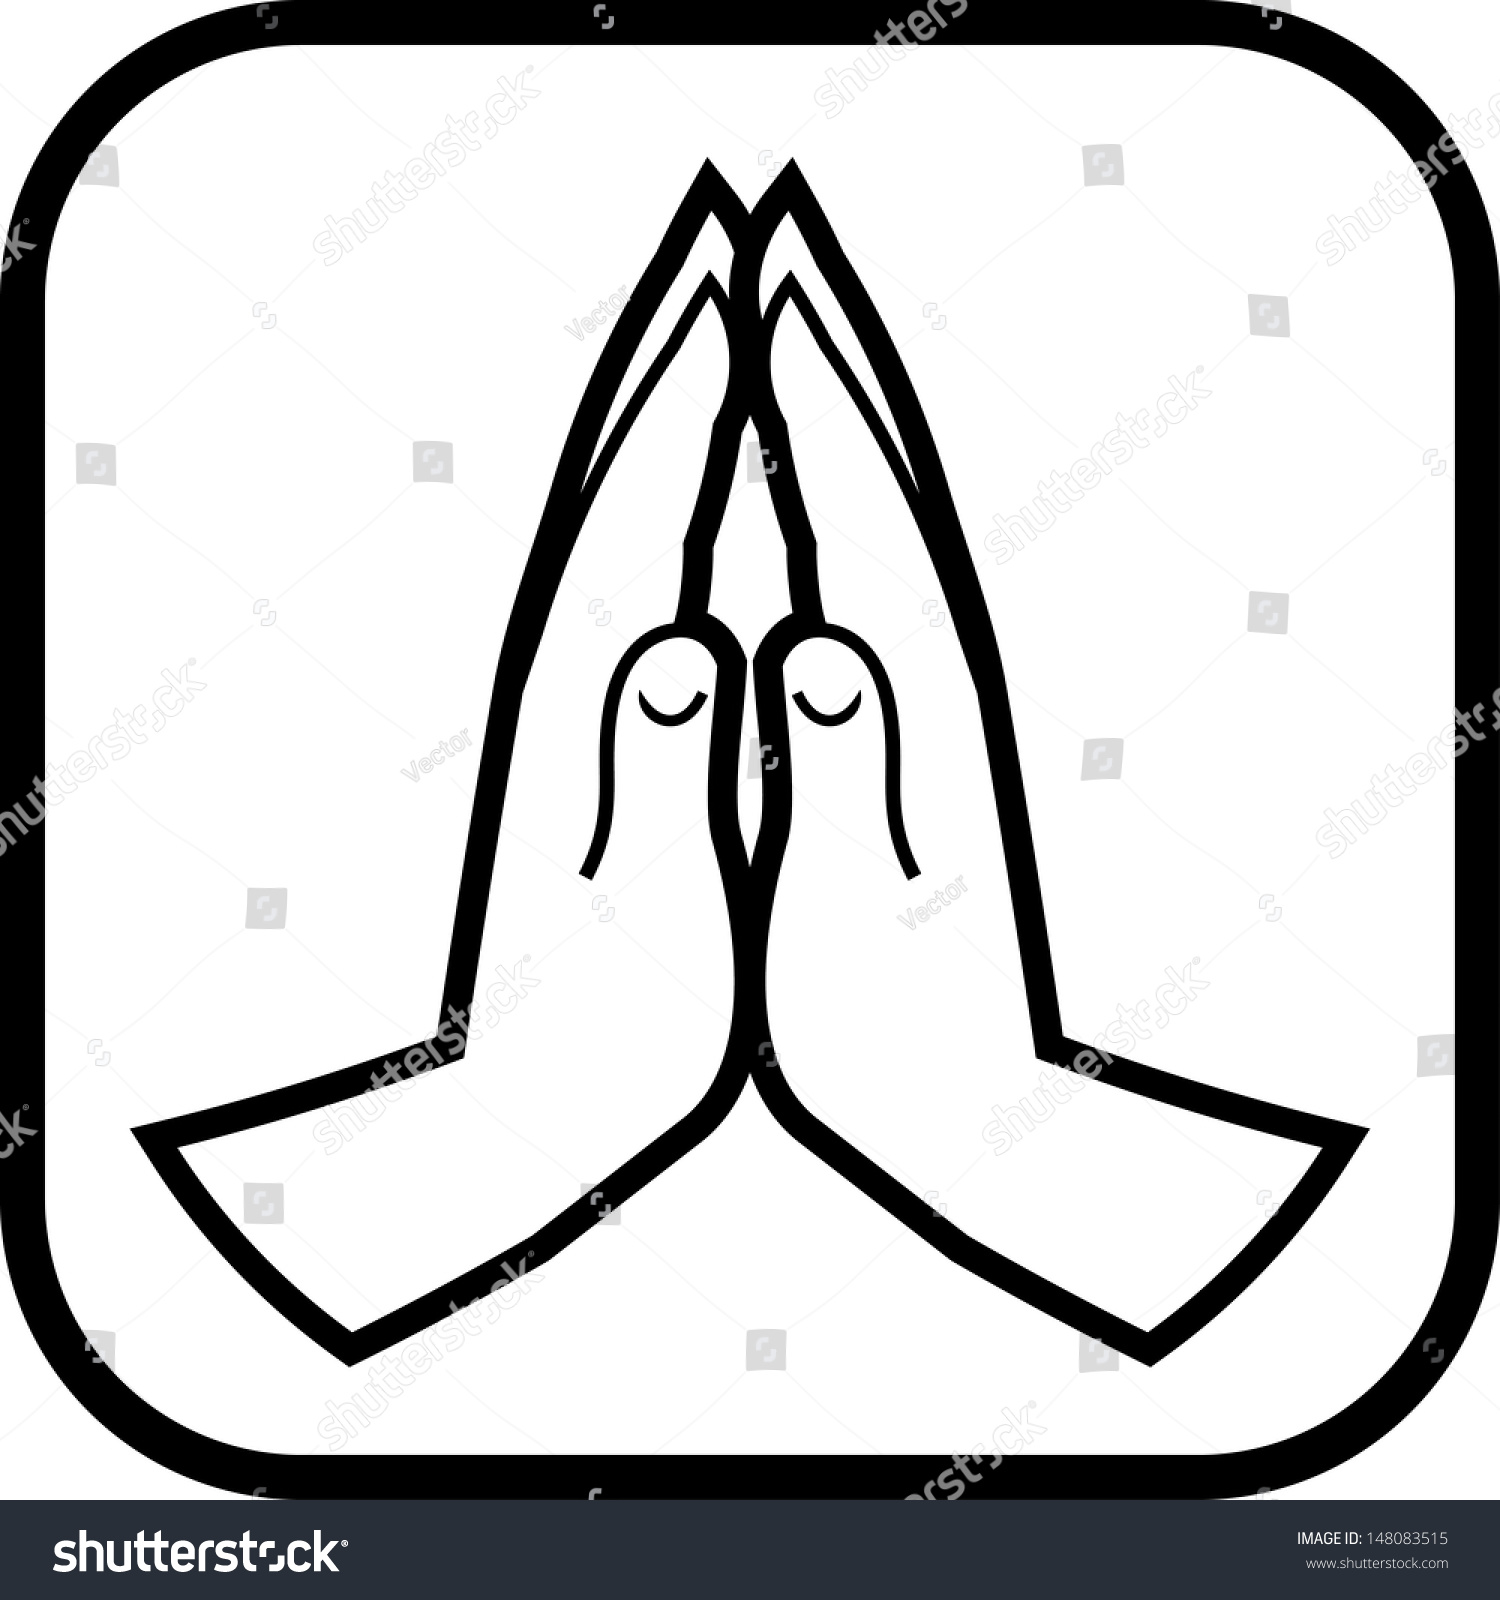 Praying Hands Vector Icon - 148083515 : Shutterstock